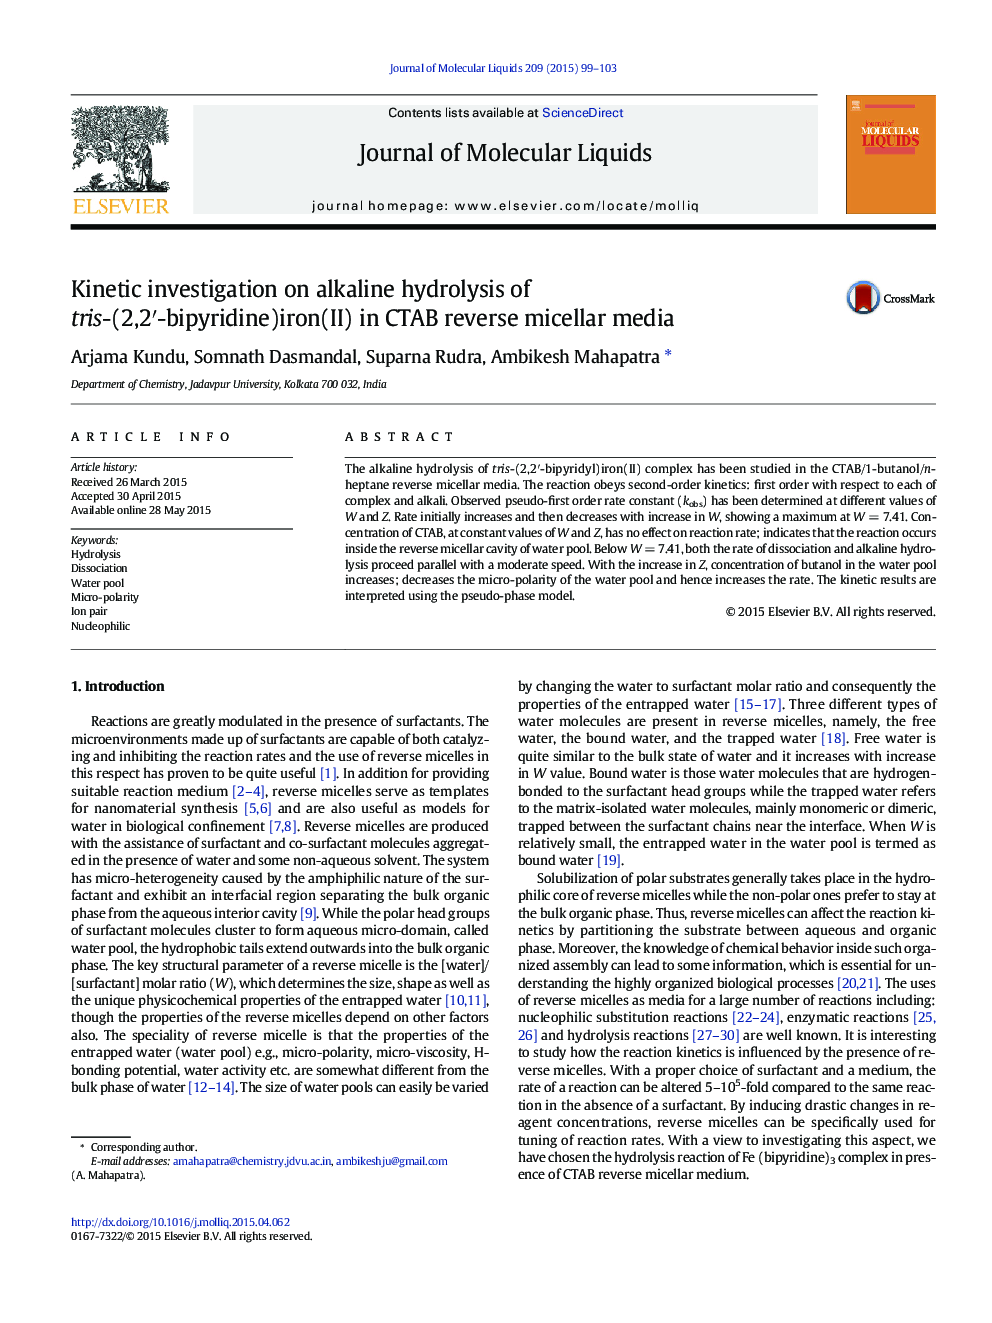 Kinetic investigation on alkaline hydrolysis of tris-(2,2Ê¹-bipyridine)iron(II) in CTAB reverse micellar media